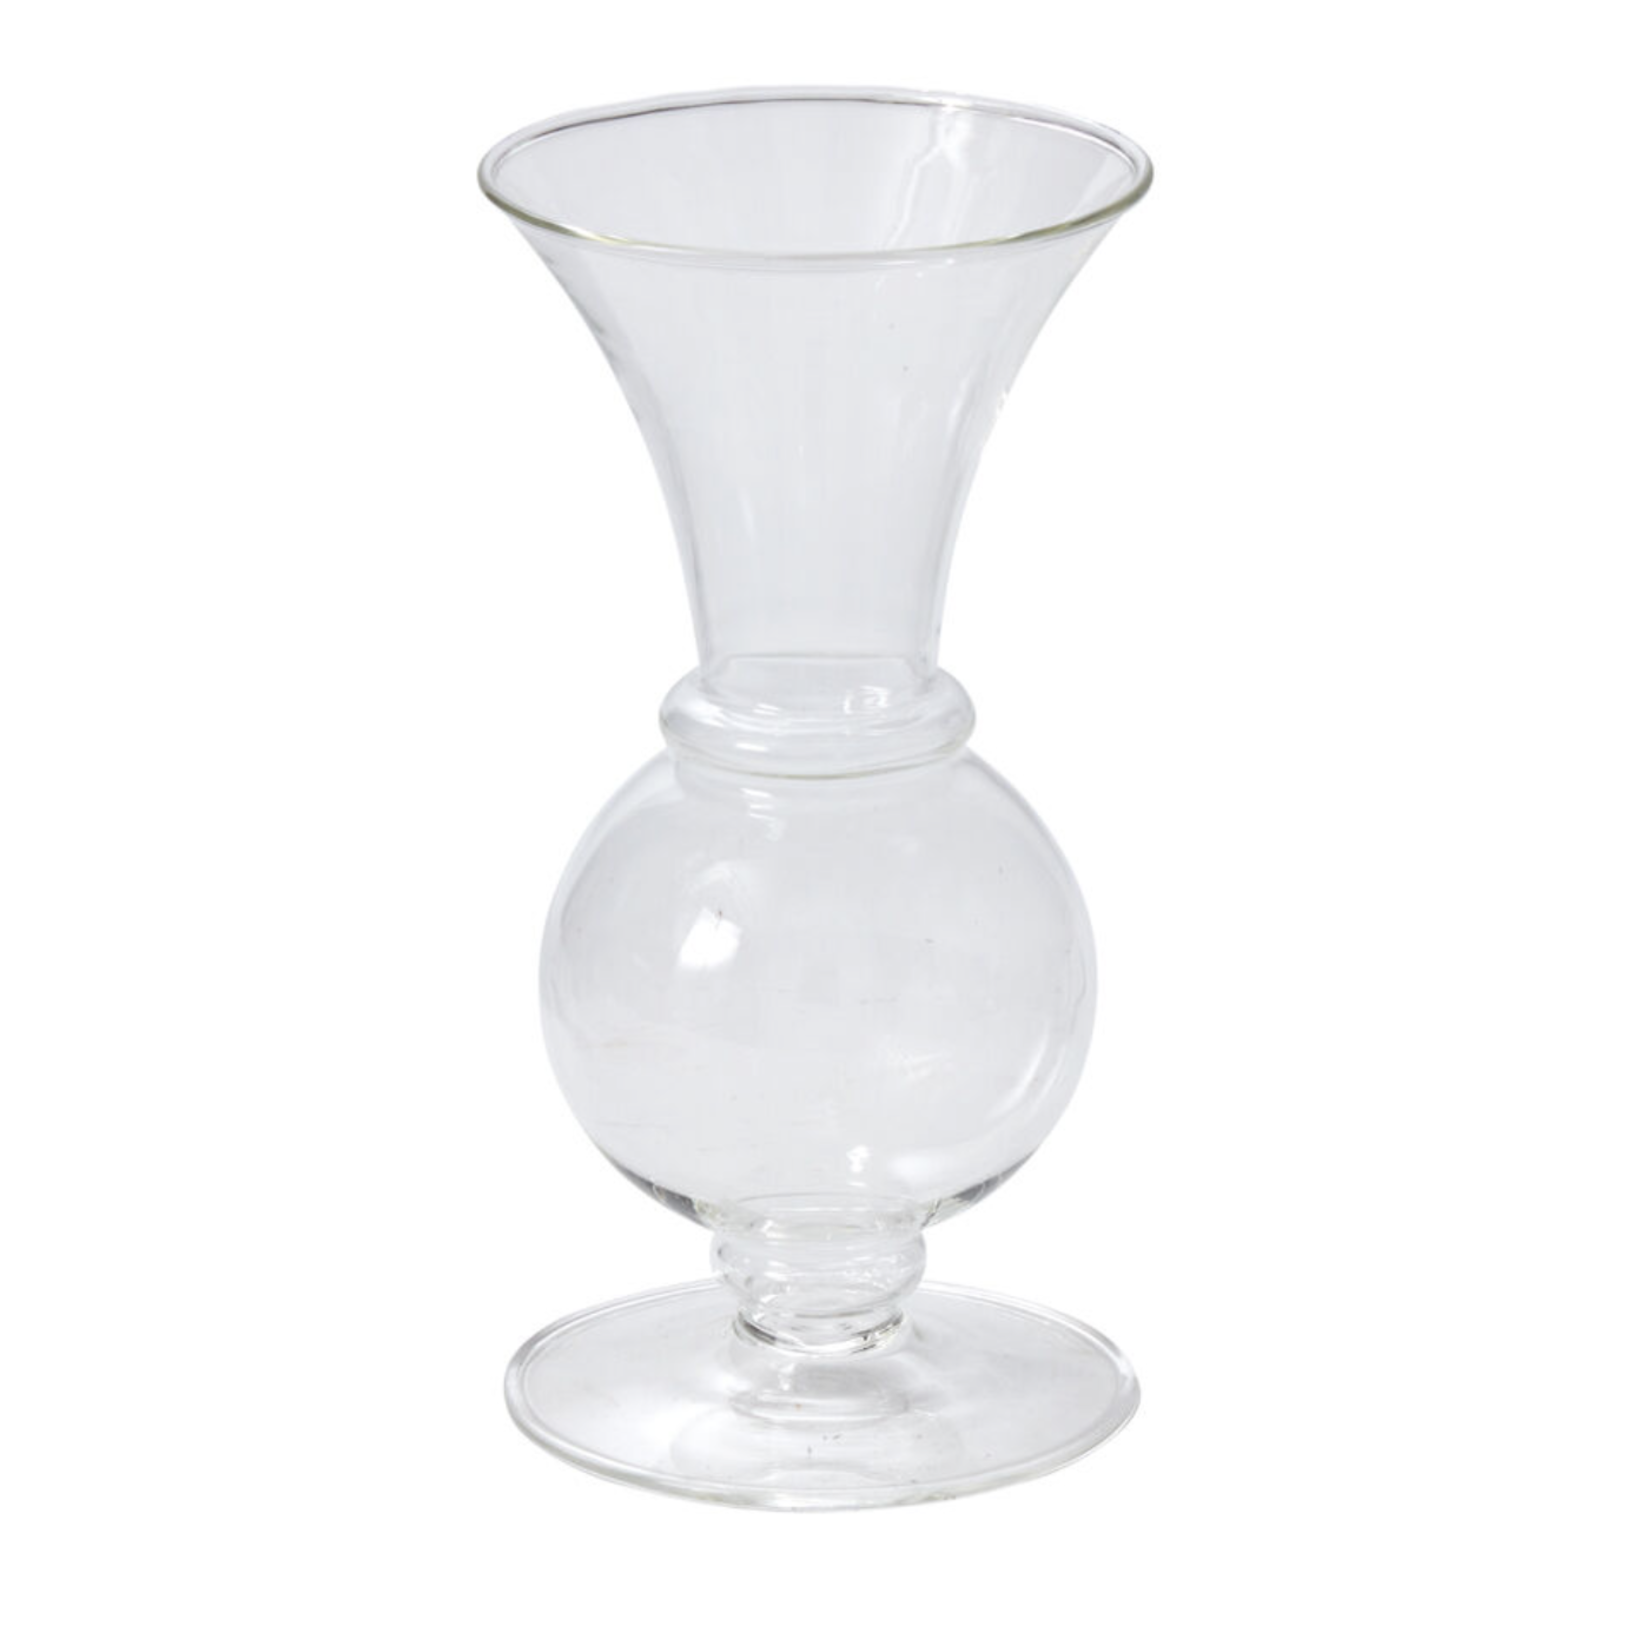 7.75”H X 4” CLEAR GLASS QUEENSLAND BUDVASE